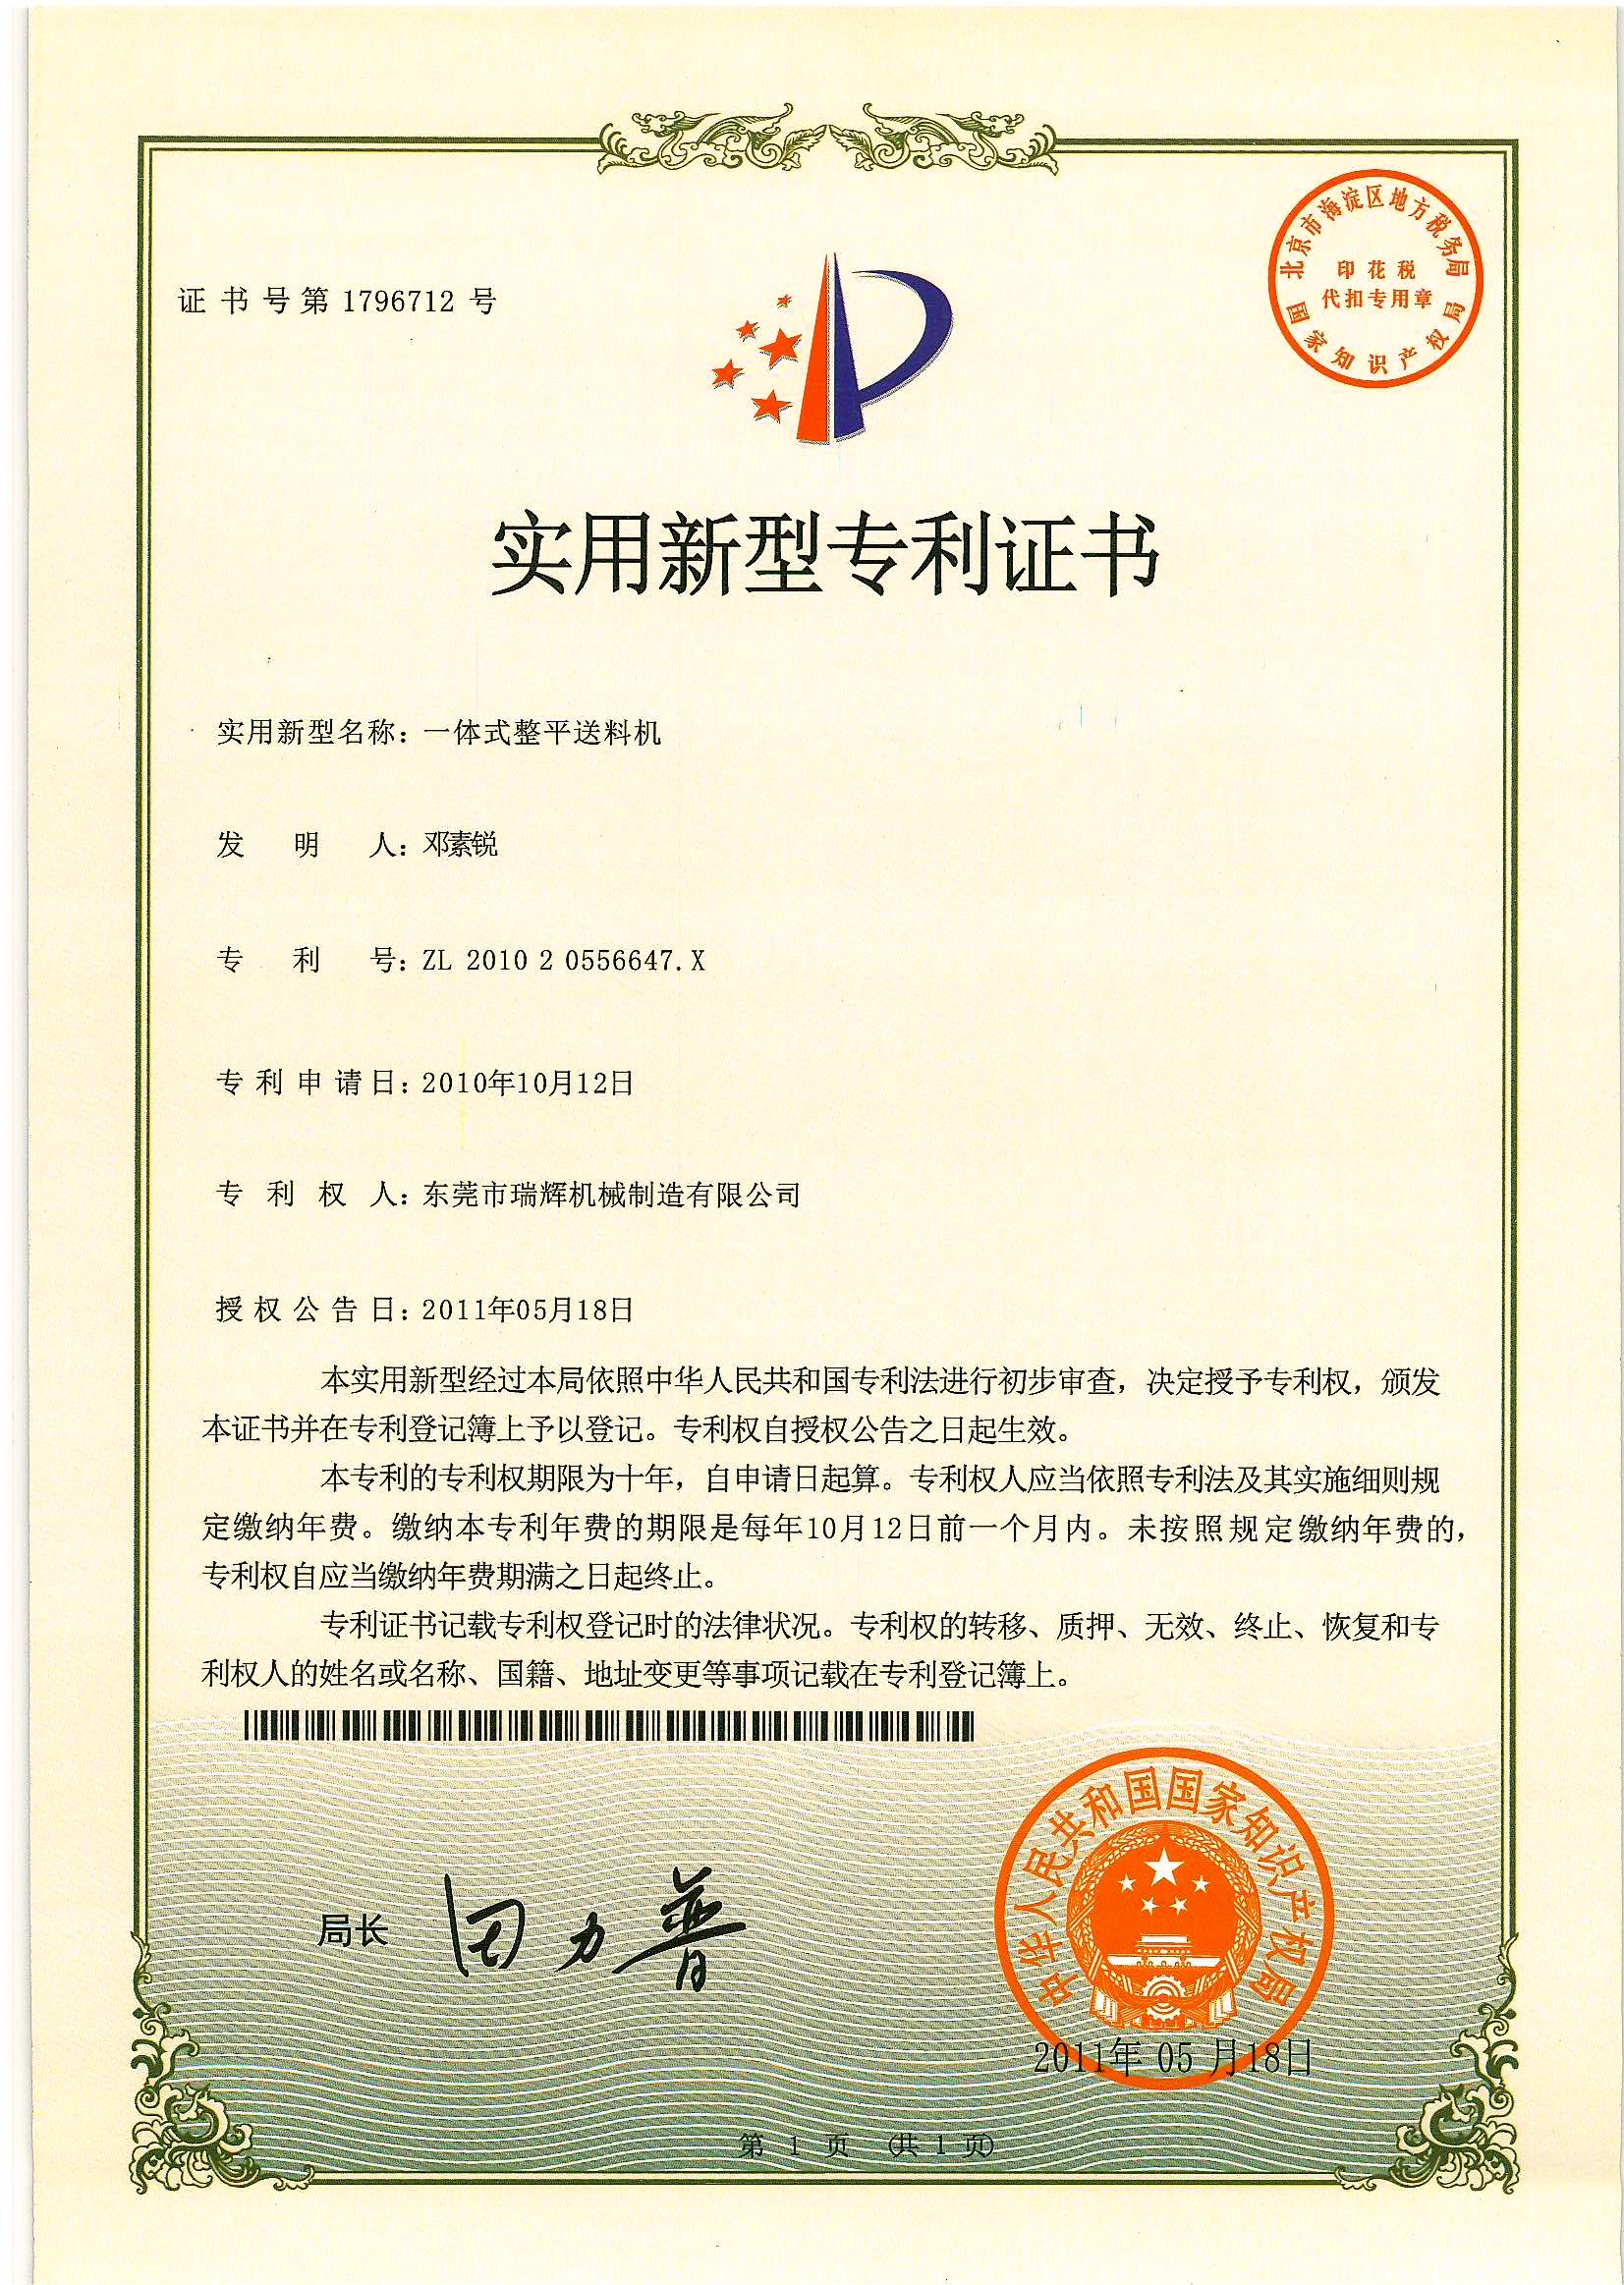 Porcelana GUANGDONG RUIHUI INTELLIGENT TECHNOLOGY CO., LTD. Certificaciones